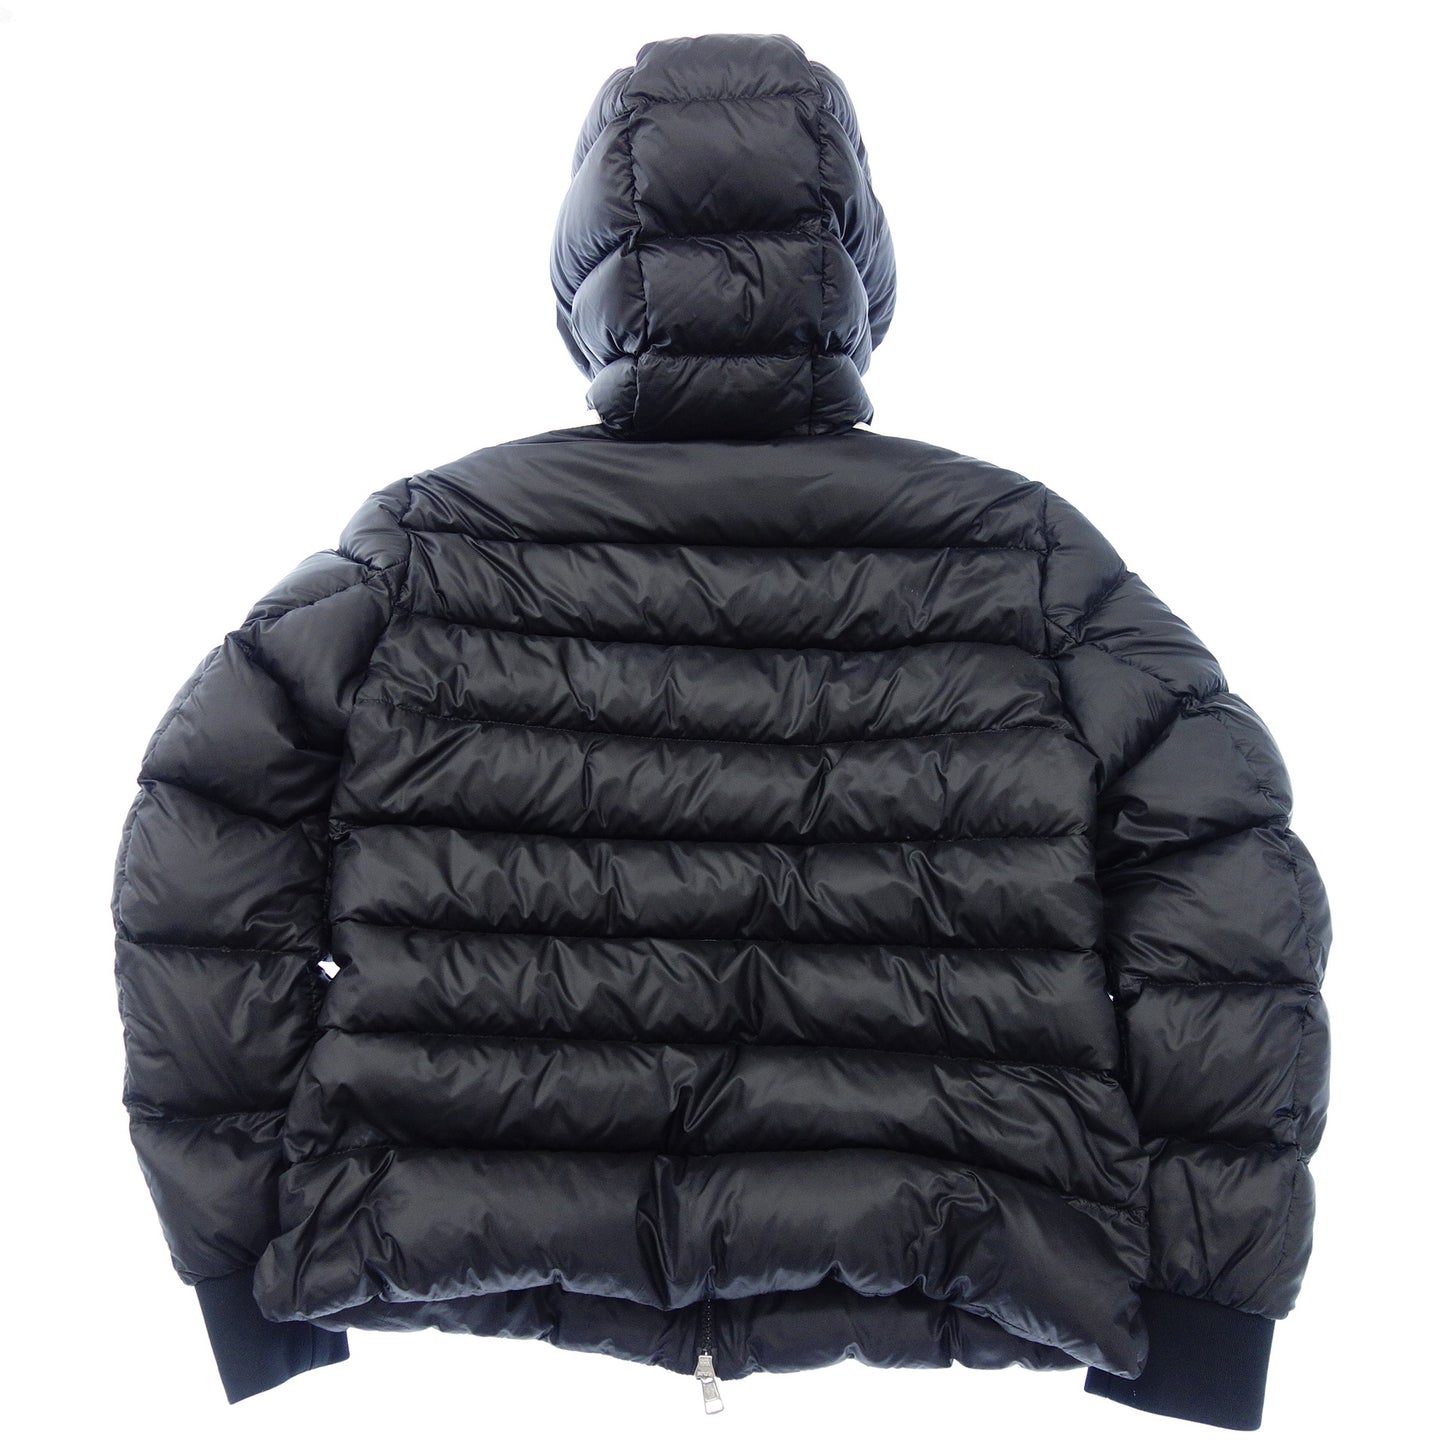 Moncler down jacket STELLAIRE JACKET 22AW H20911A00107 Men's Black 0 MONCLER [AFA16] [Used] 